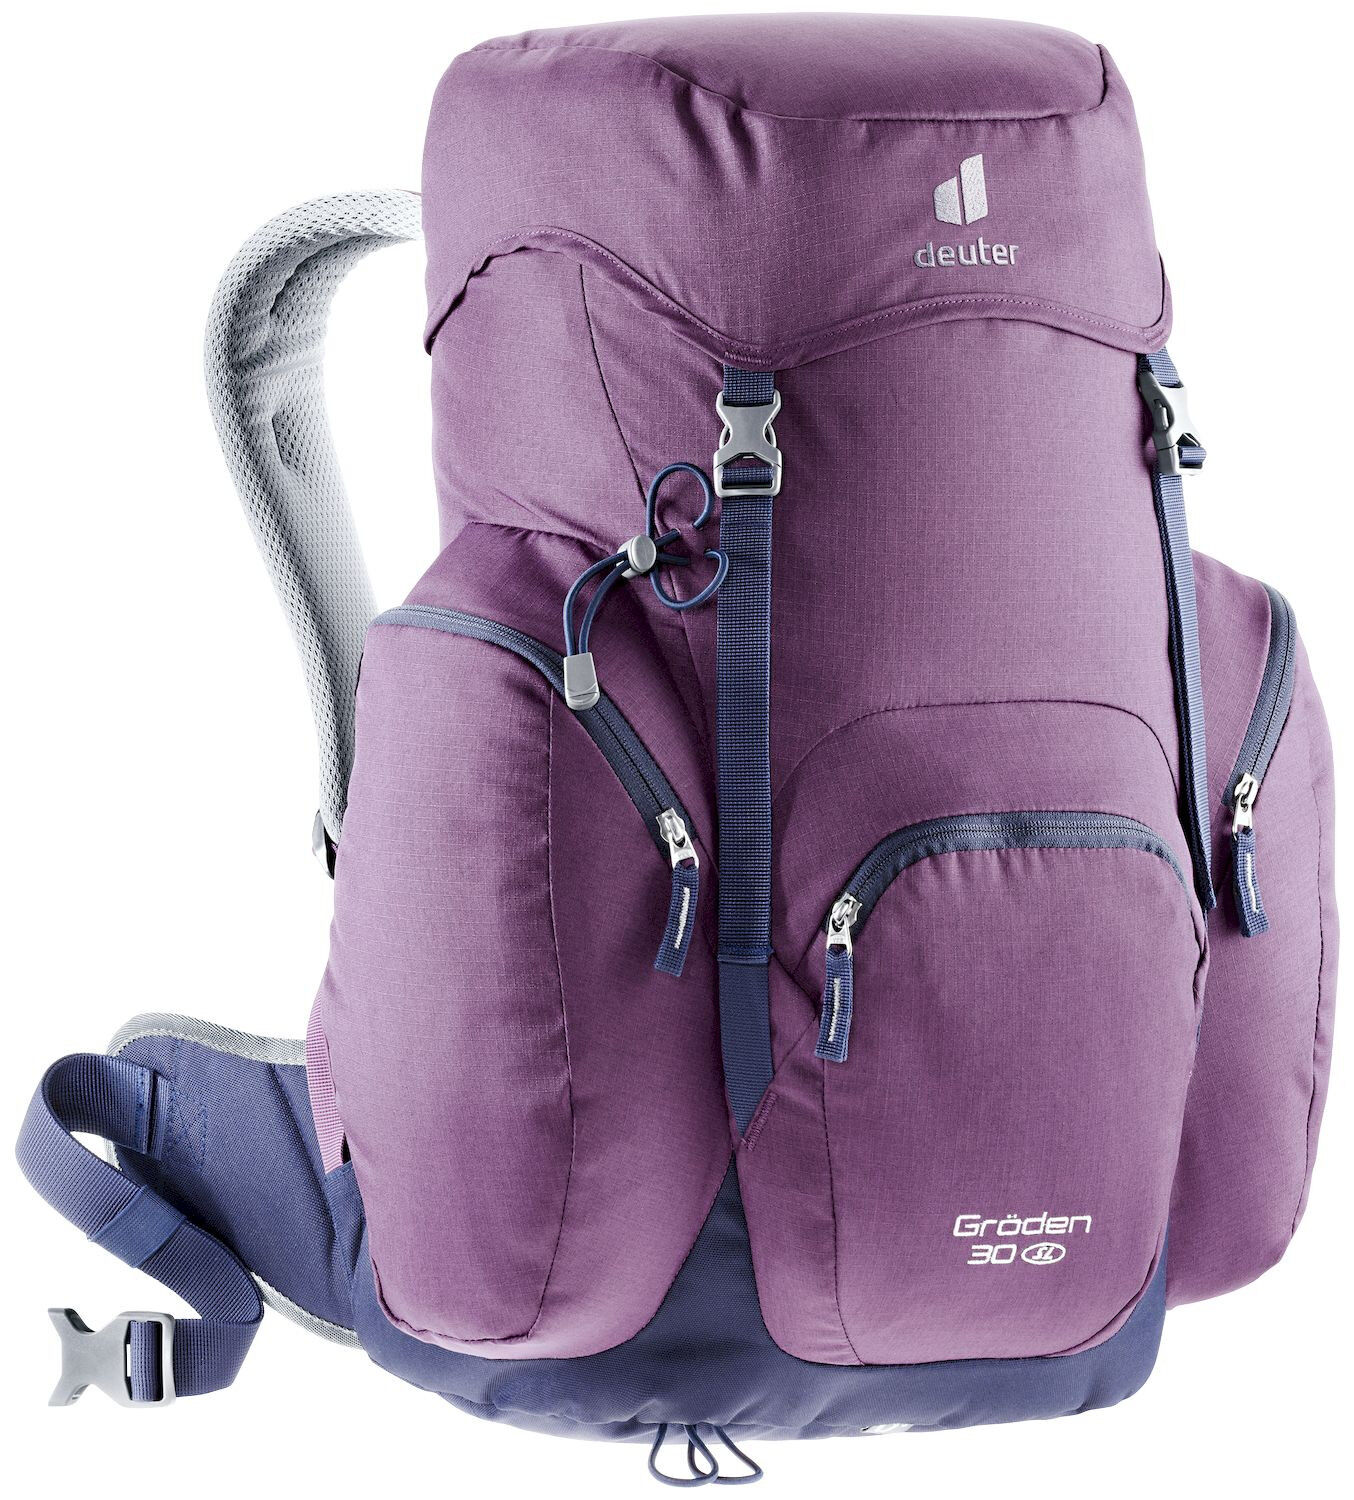 Deuter Gröden 30 SL - Walking backpack - Women's